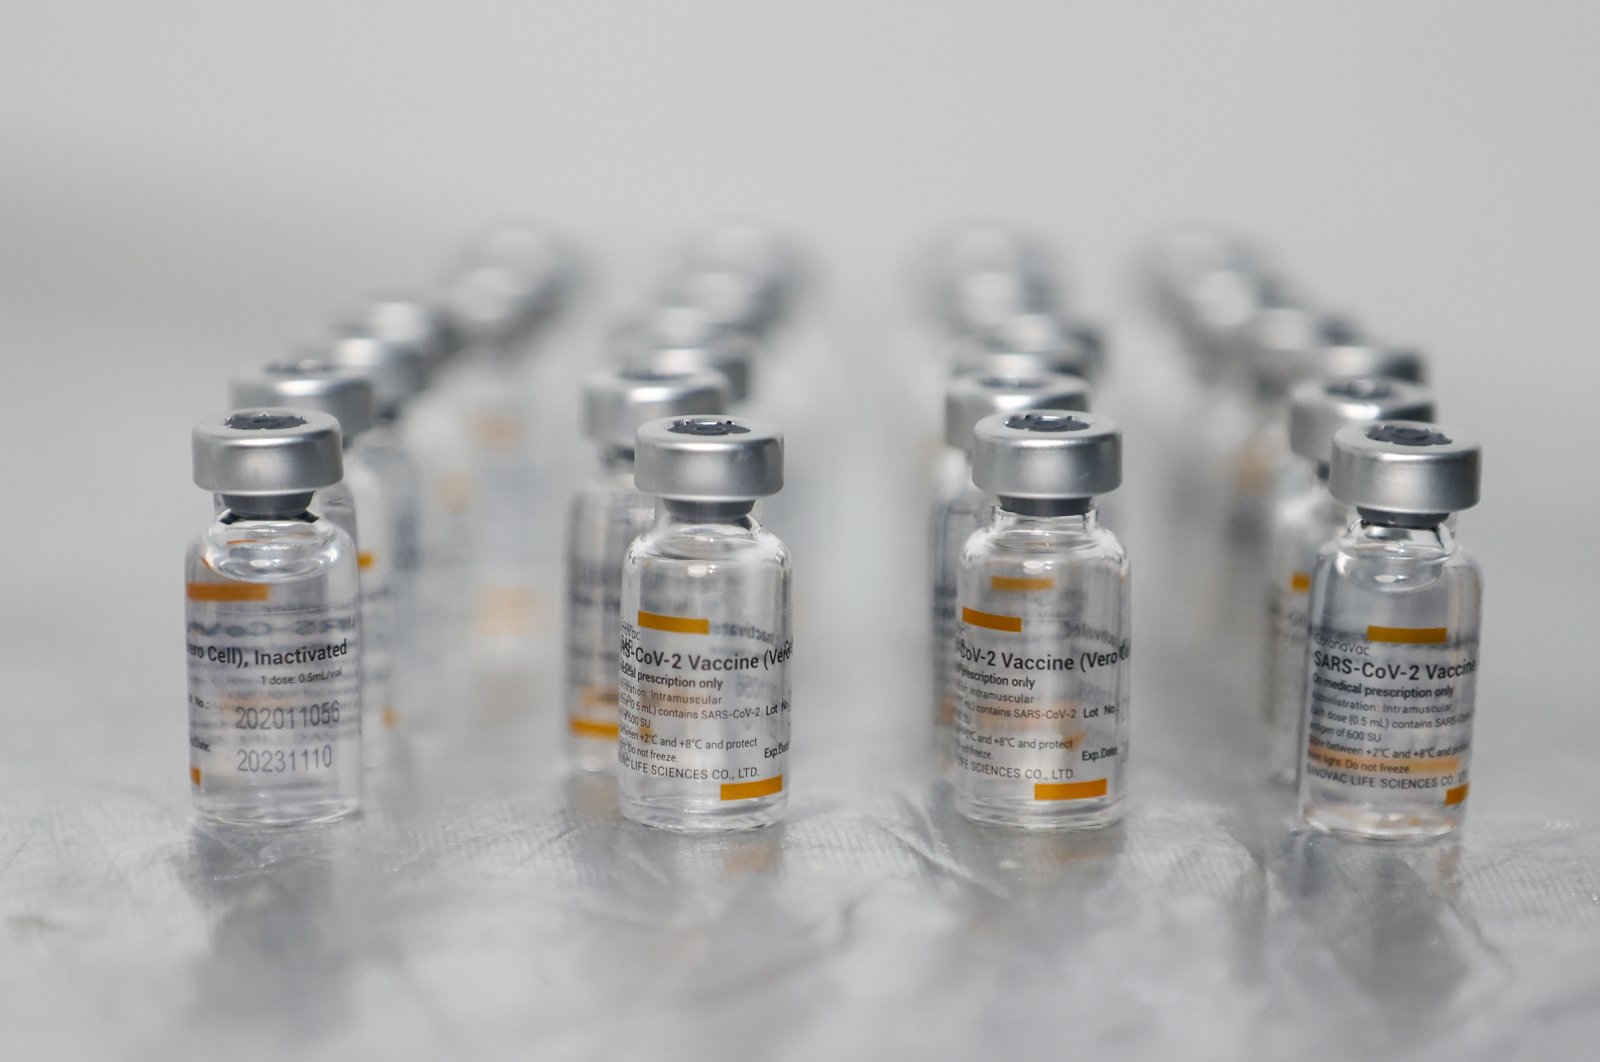 Vials of China-based biopharmaceutical company Sinovac Biotech's CoronaVac vaccine, Jan. 25, 2021. (AA Photo)